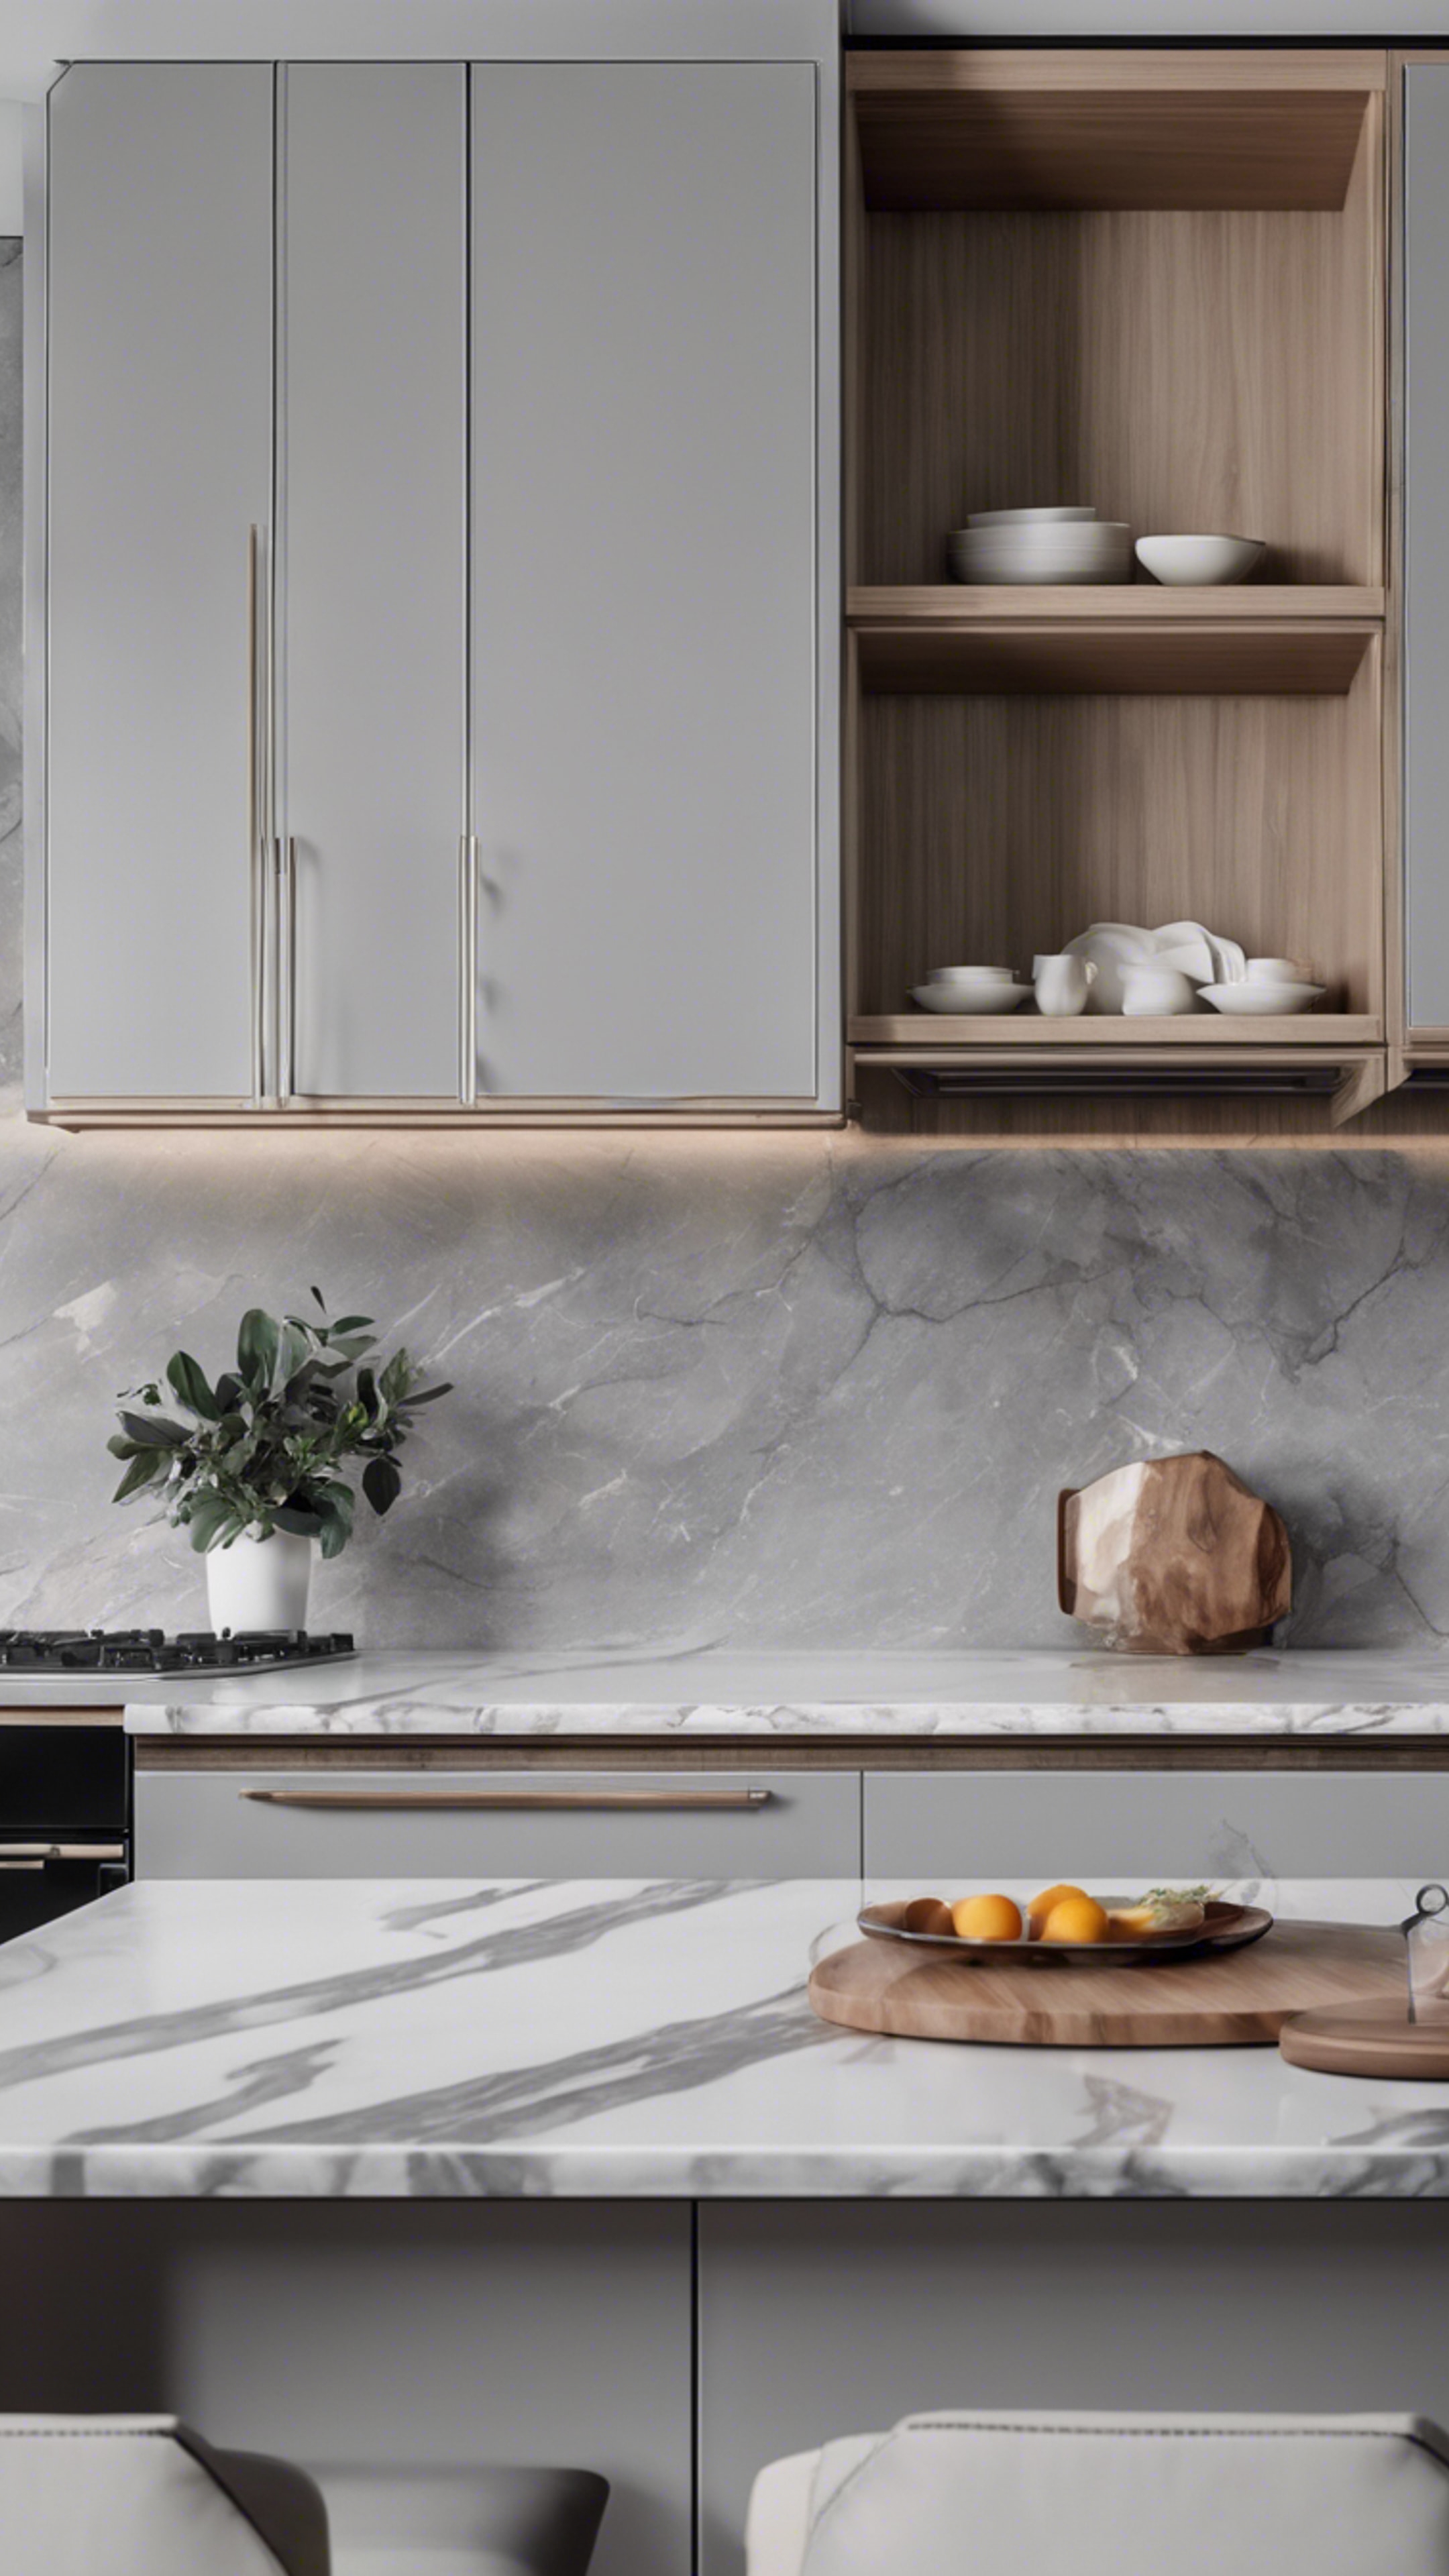 A sleek, modern kitchen design featuring light gray cabinetry with an elegant marble island. Дэлгэцийн зураг[6f0121d4a4f844f596f3]